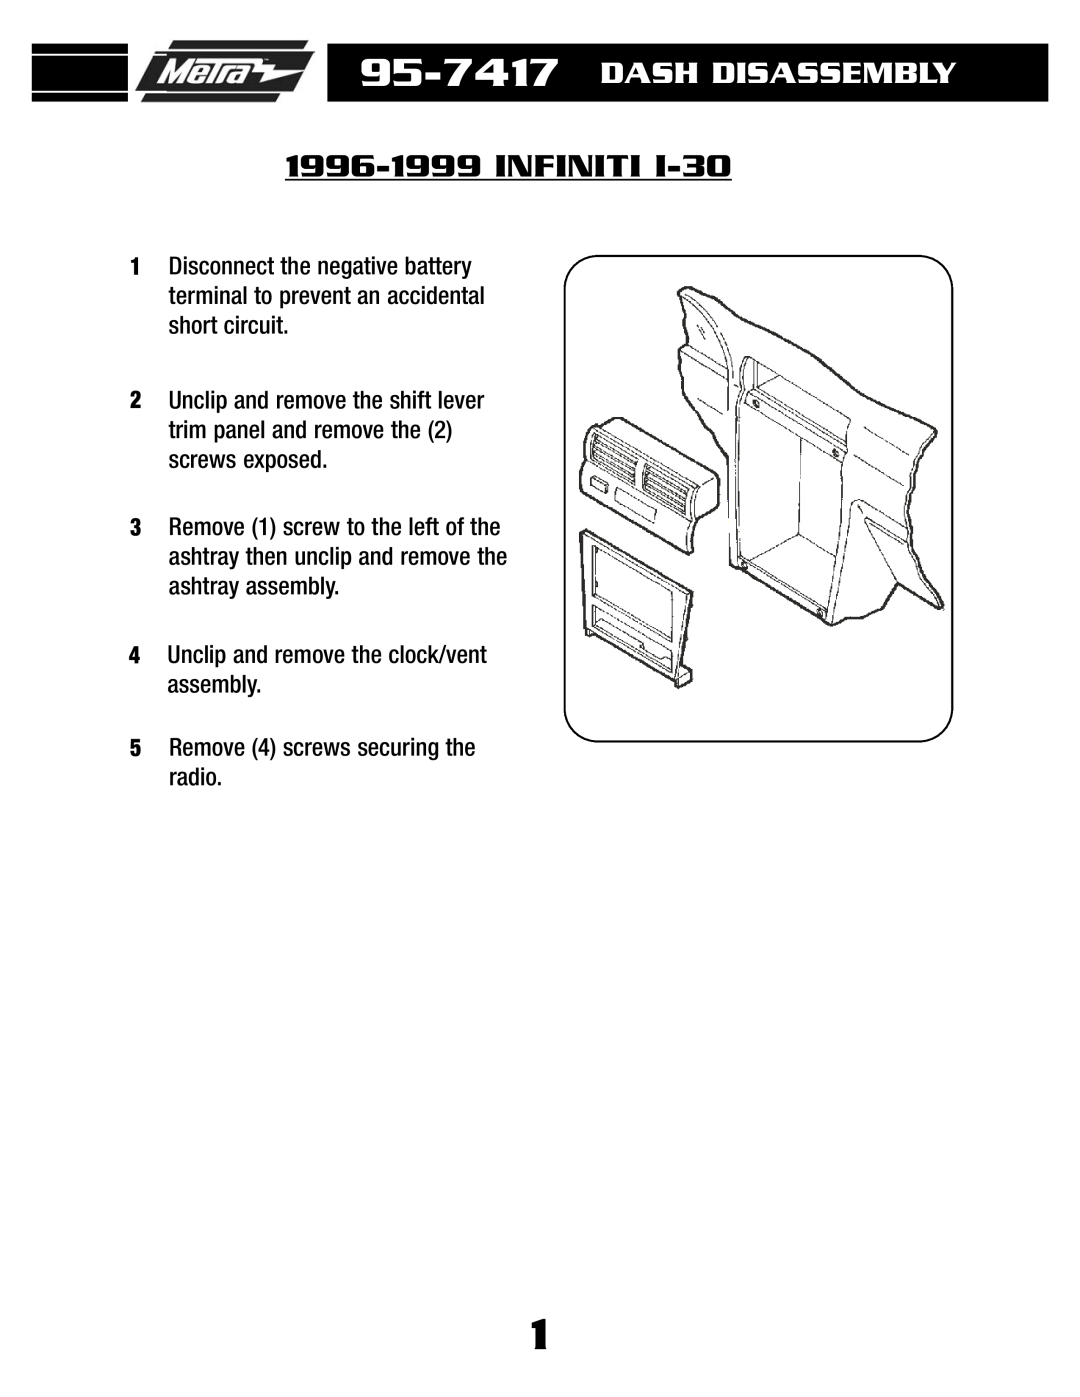 Metra Electronics 95-7417 installation instructions 1996-1999INFINITI, Dash Disassembly 